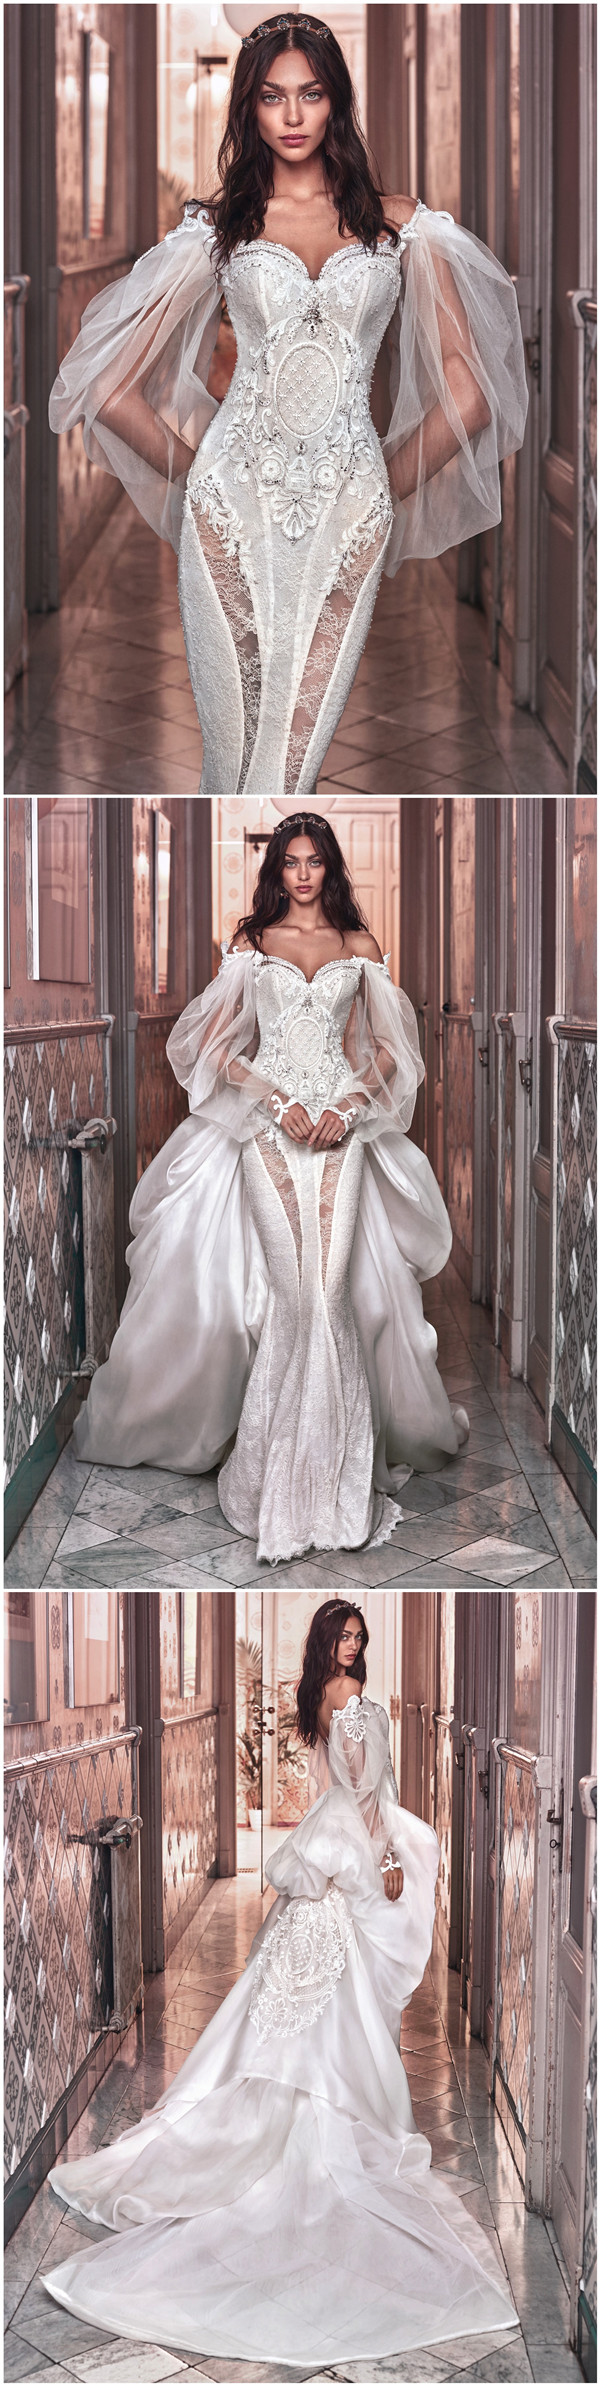 Galia Lahav Wedding Dresses 2018 Victorian Affinity Collection - Thelma